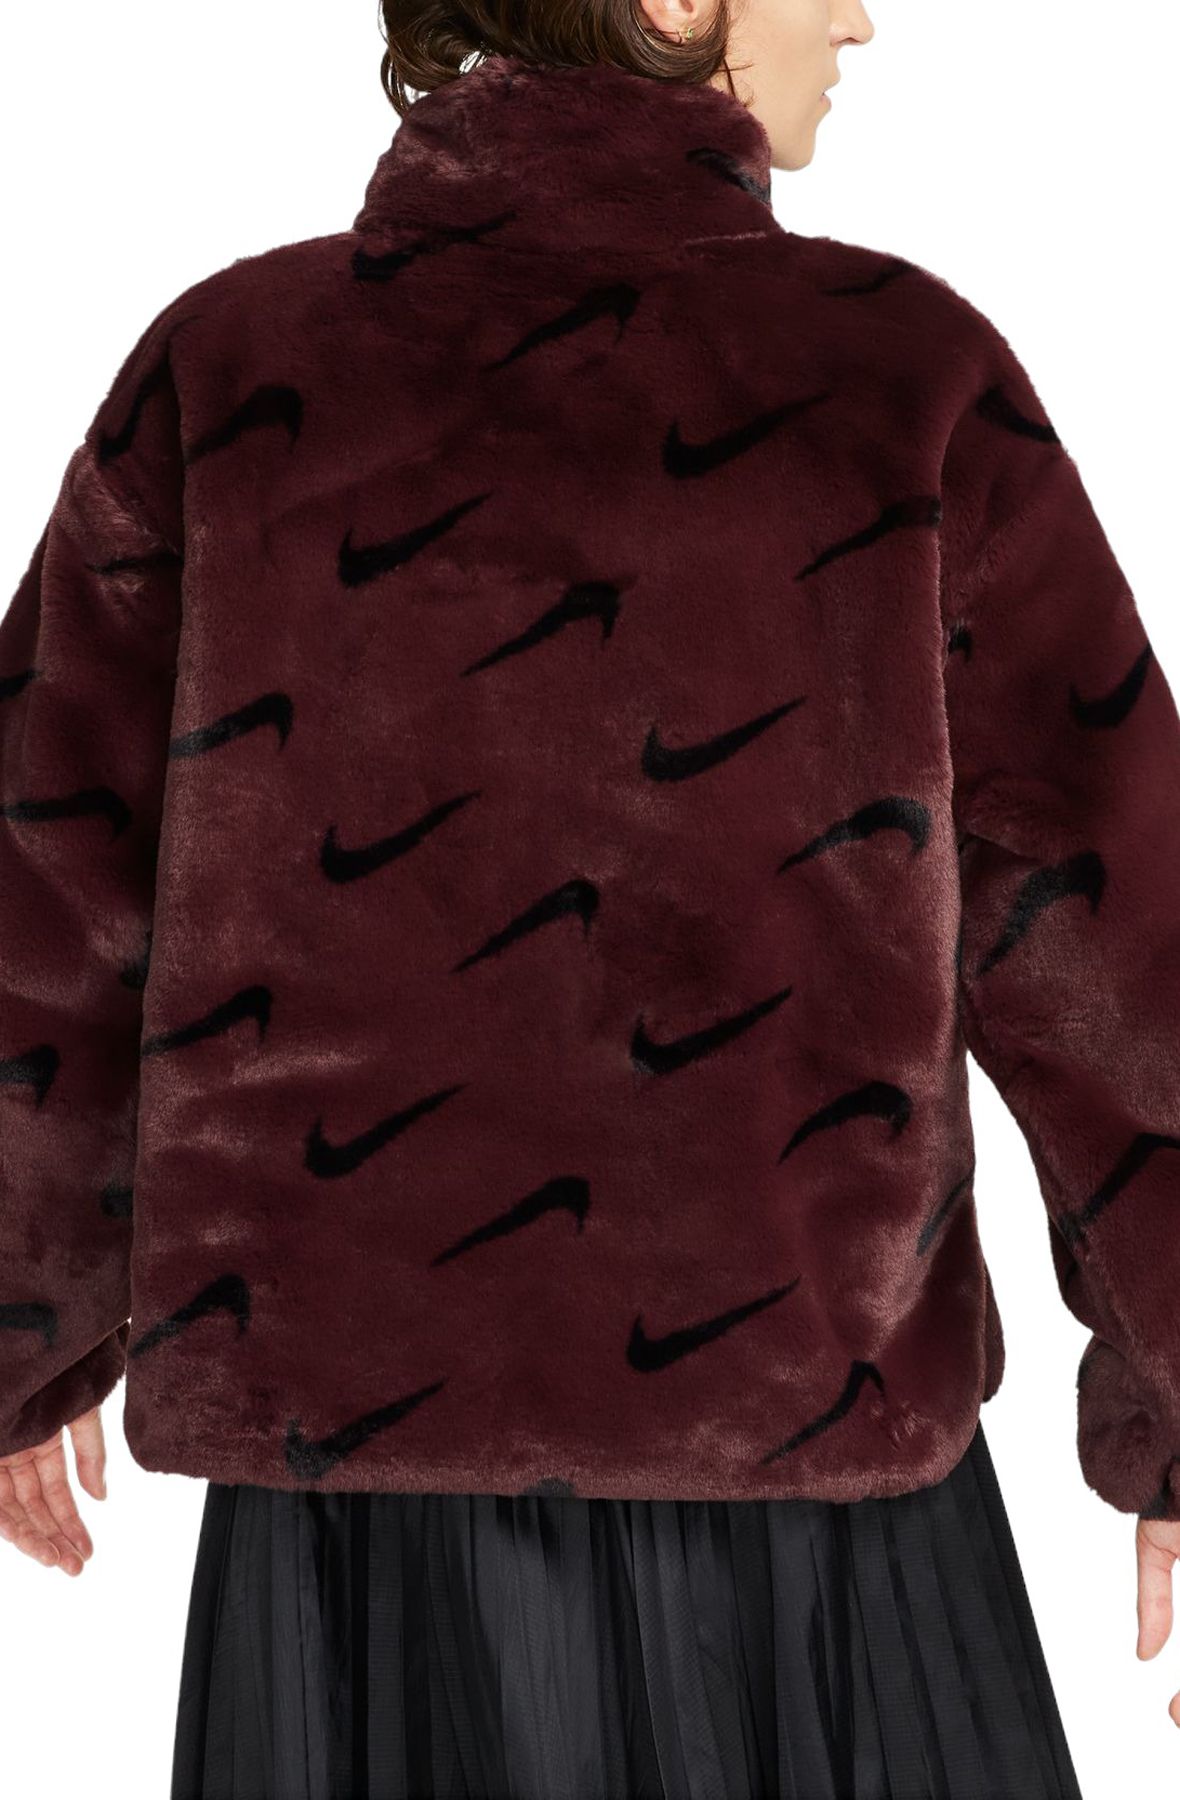 NIKE Sportswear Plush Printed Faux Fur Jacket DQ6842 652 - Shiekh